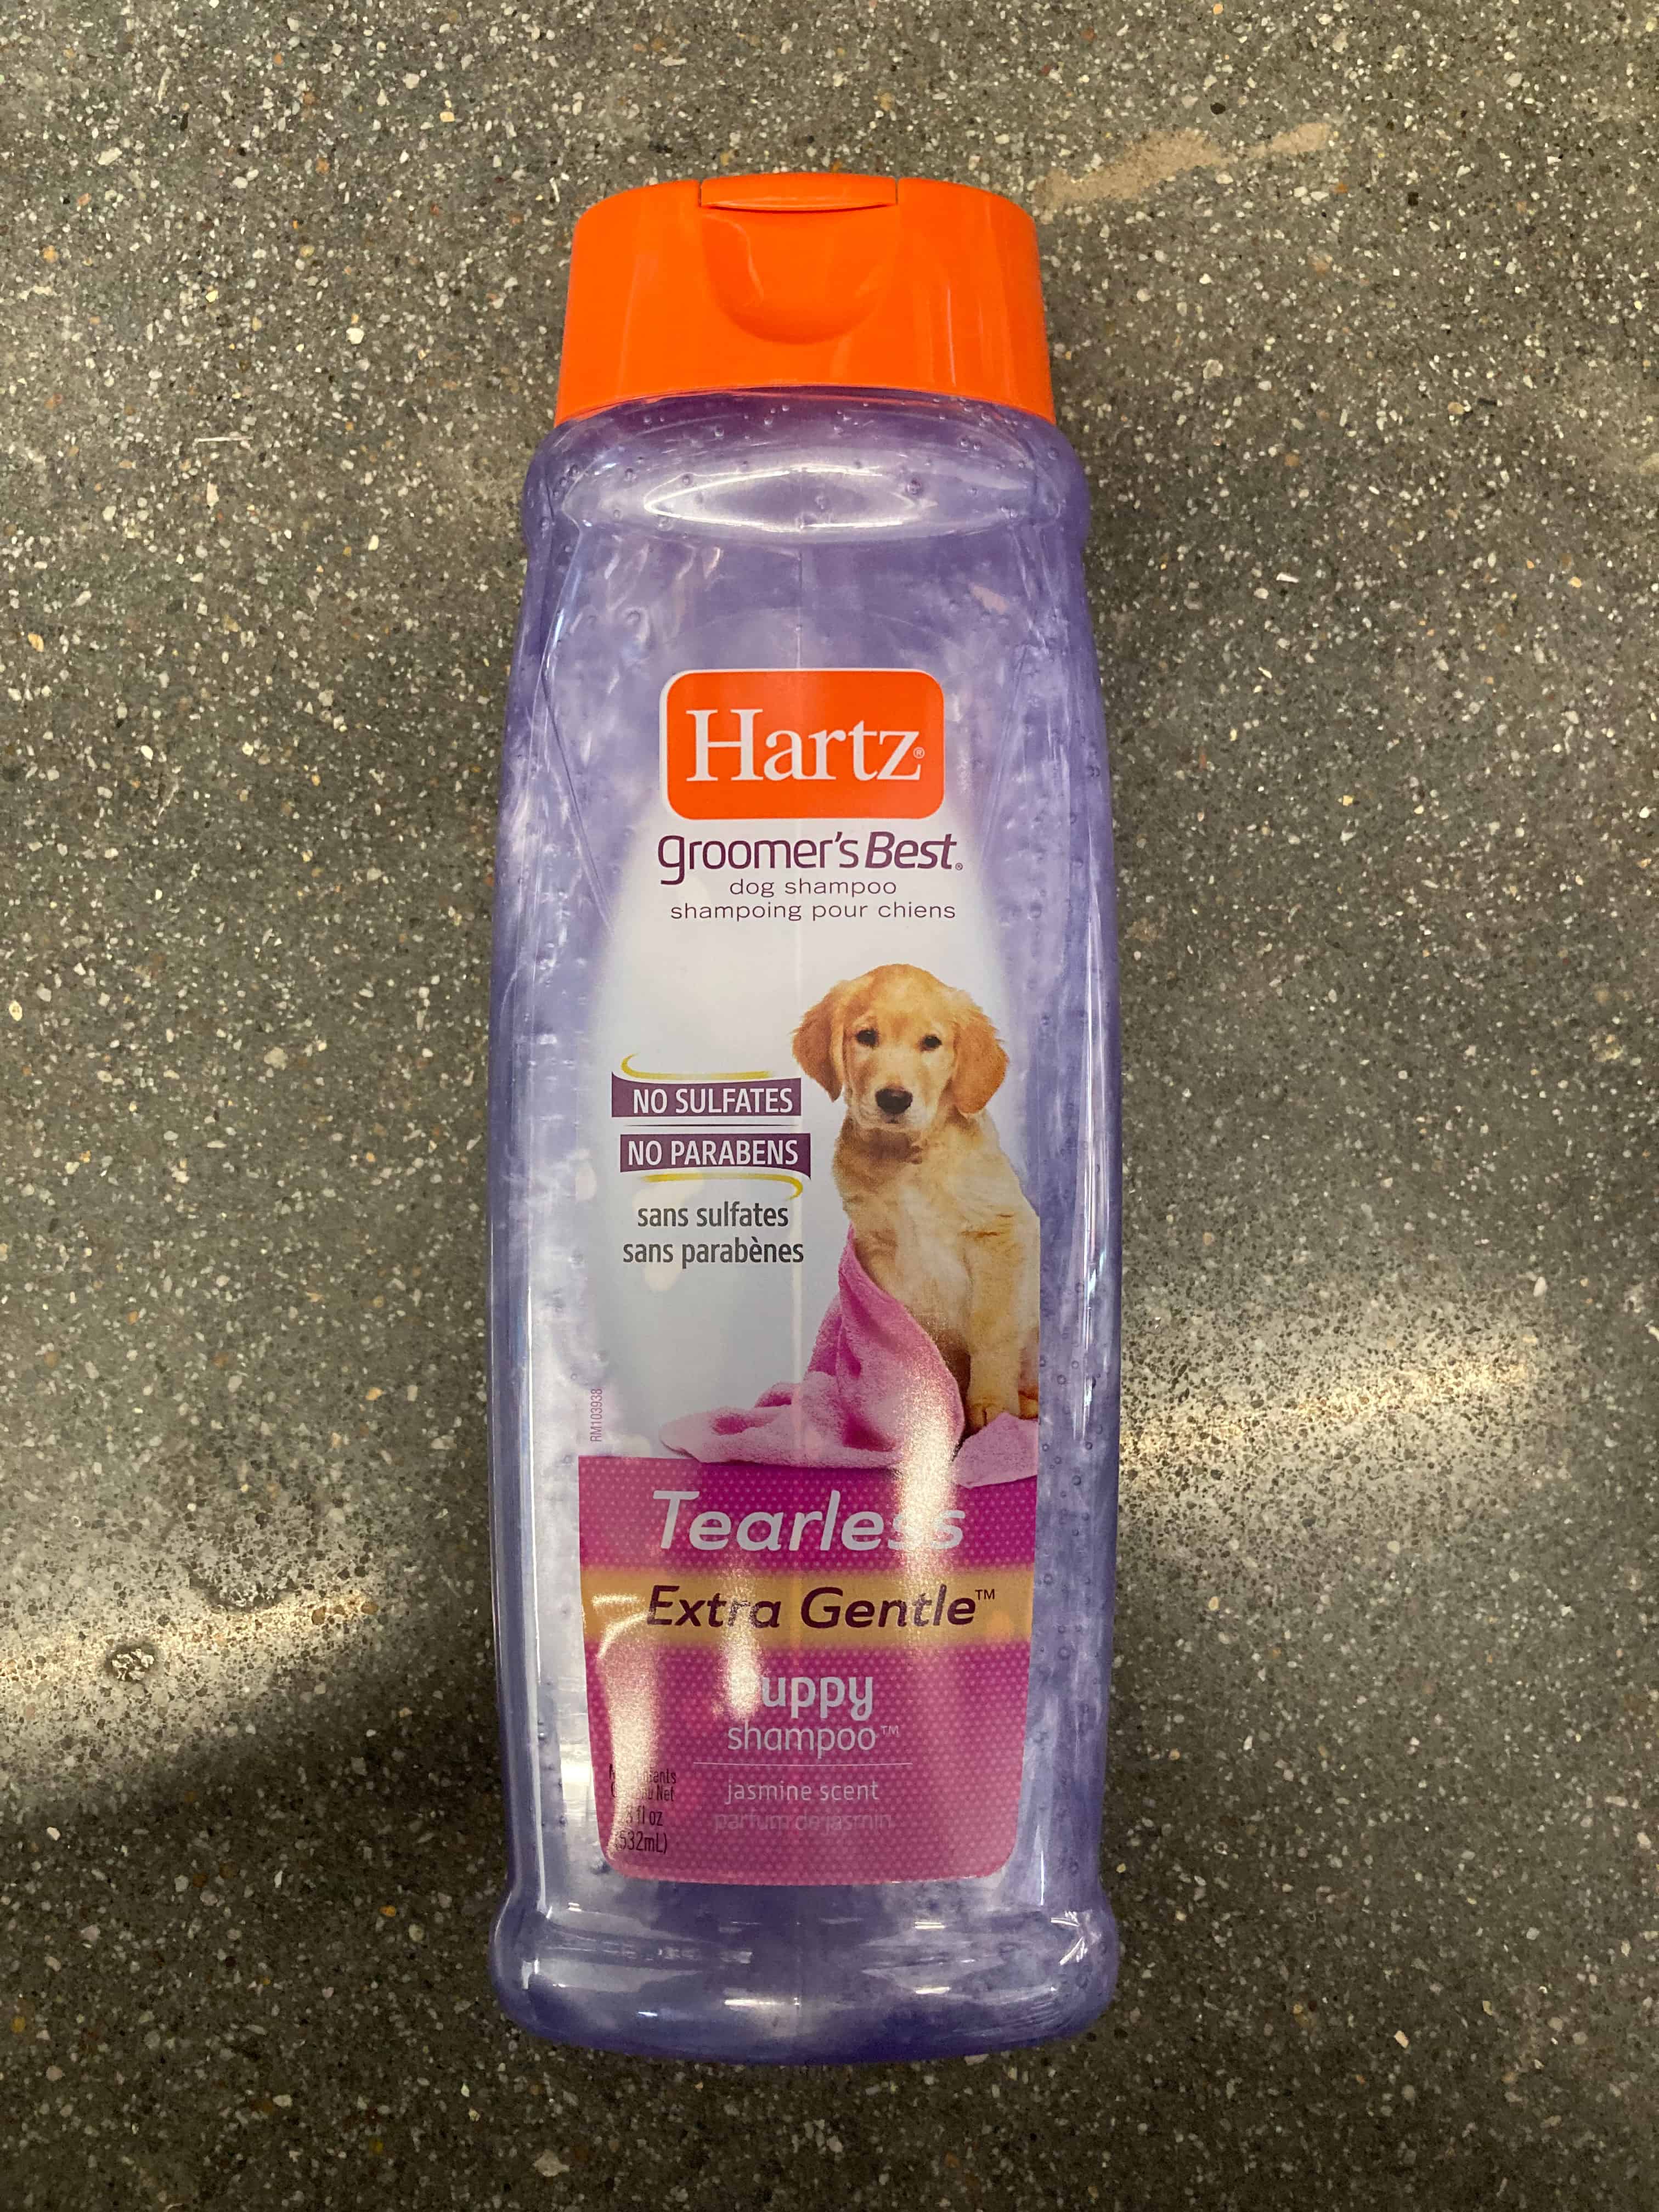 Gentle Hartz dog shampoo